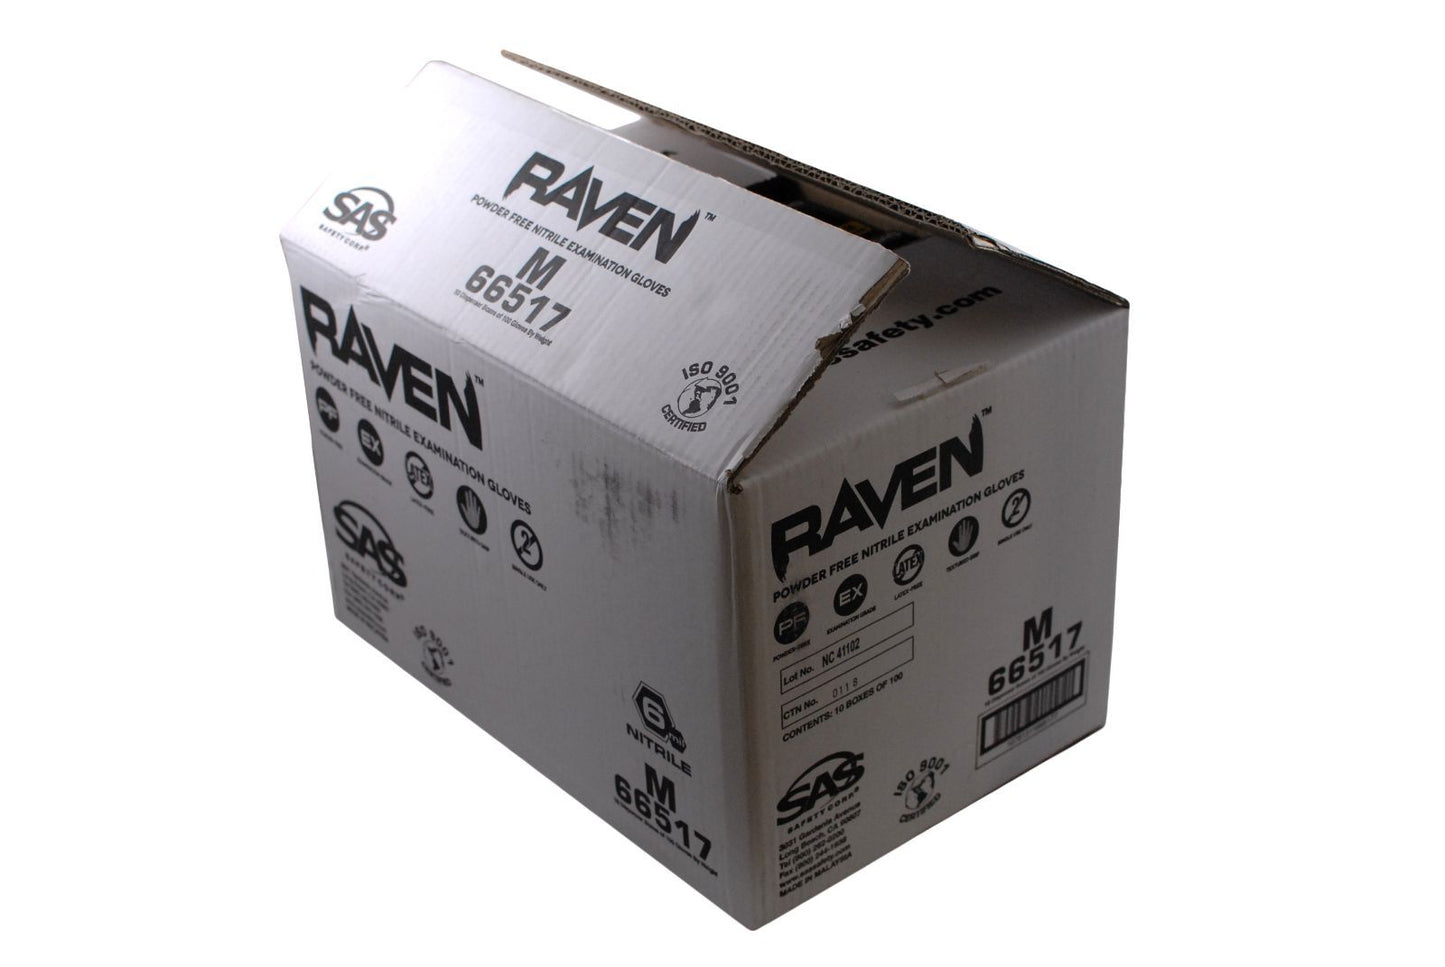 Raven Powder-Free Black Nitrile 6 Mil Gloves MED